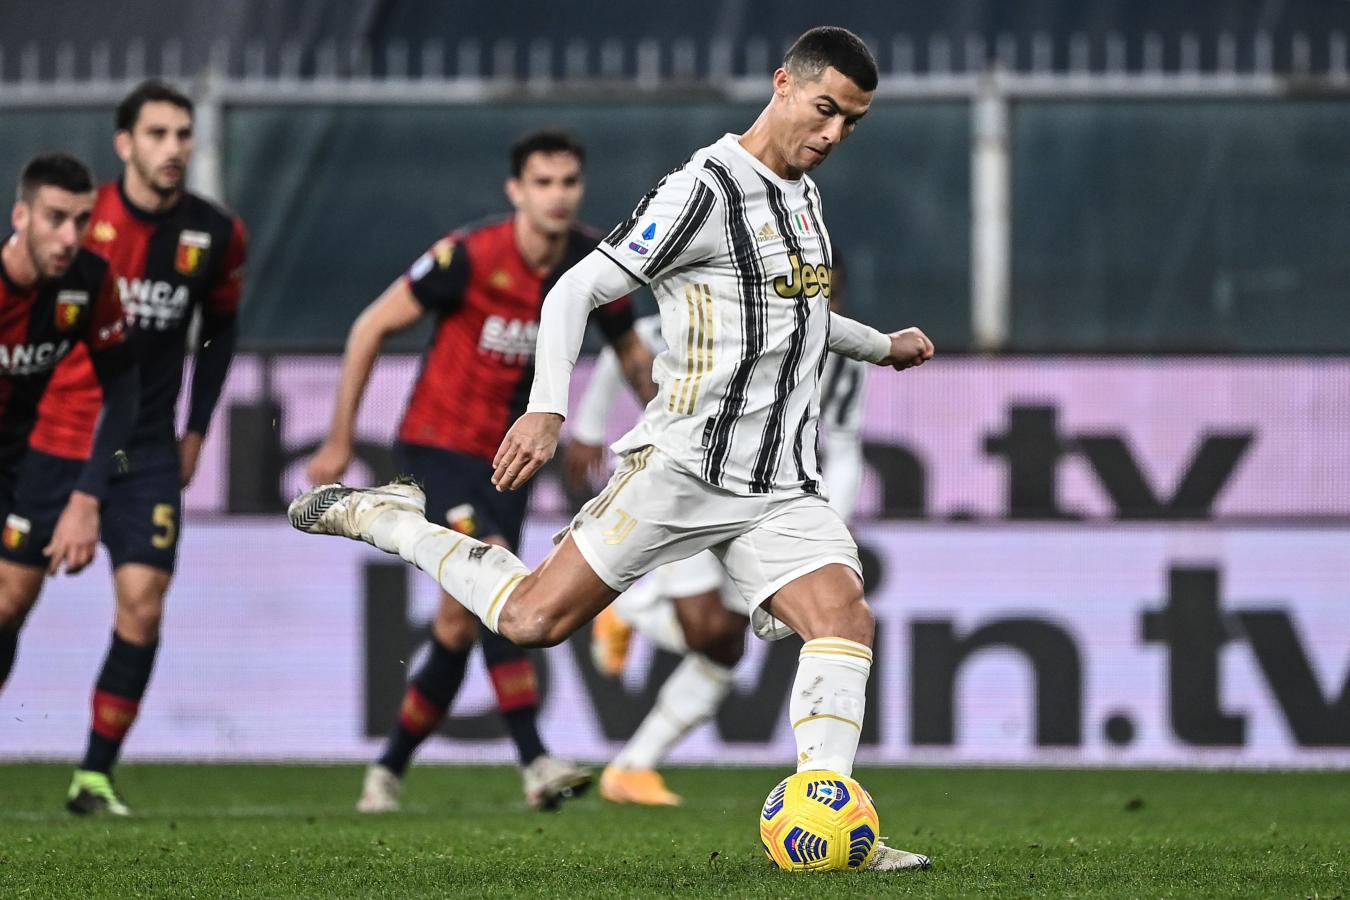 Imagen Cristiano anota uno de sus dos goles de penal. Llegó a los 79 tantos en Juventus en 100 partidos. Números asombrosos.